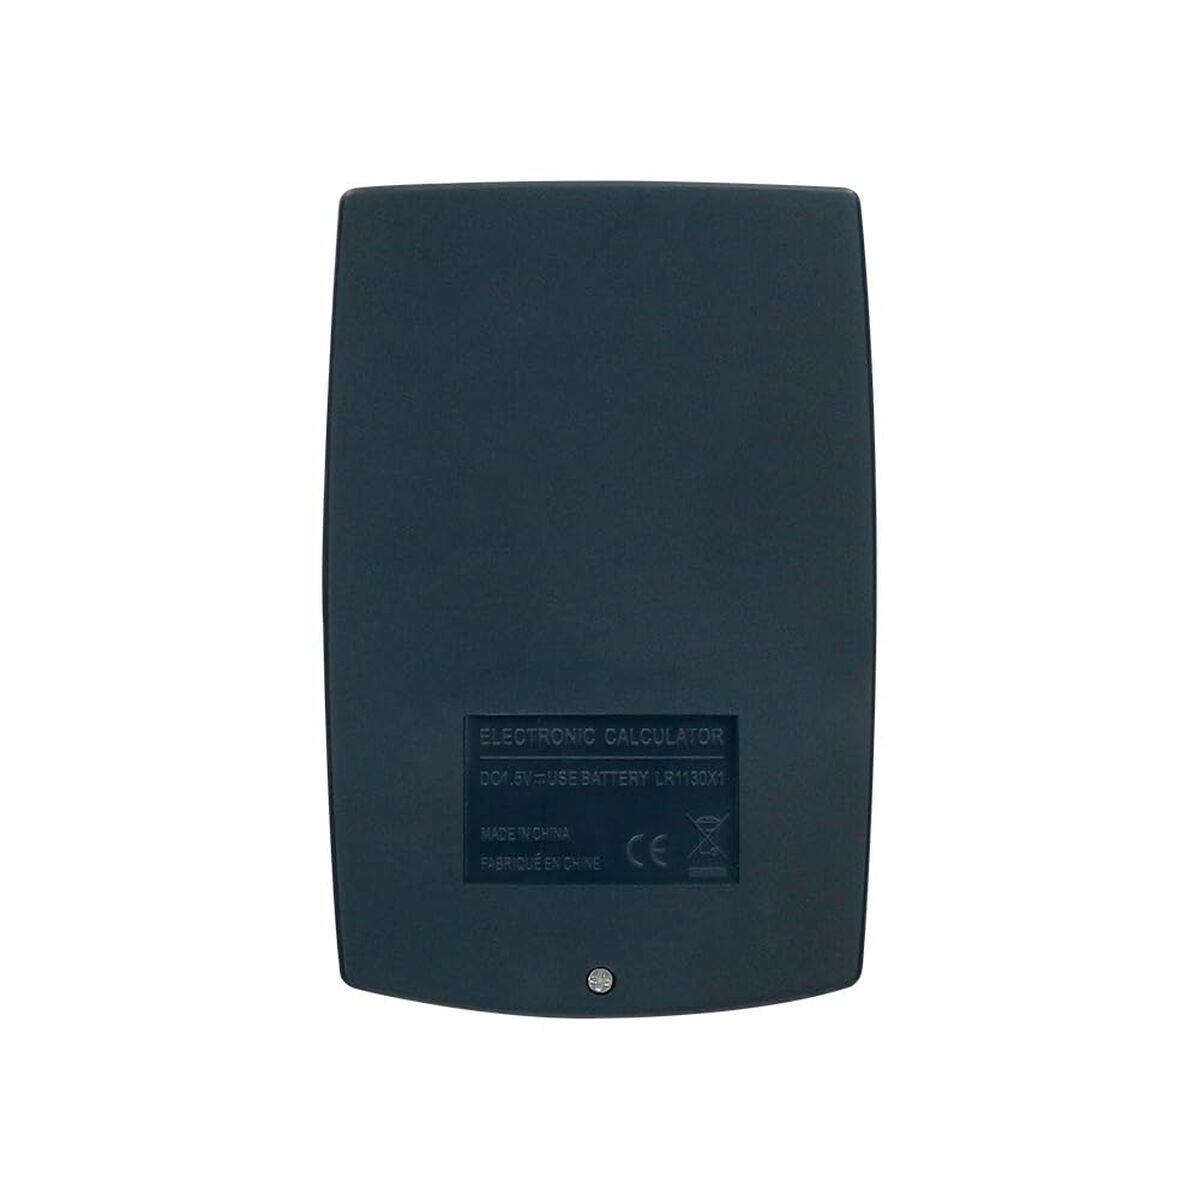 Taschenrechner Liderpapel XF02 Blau Kunststoff